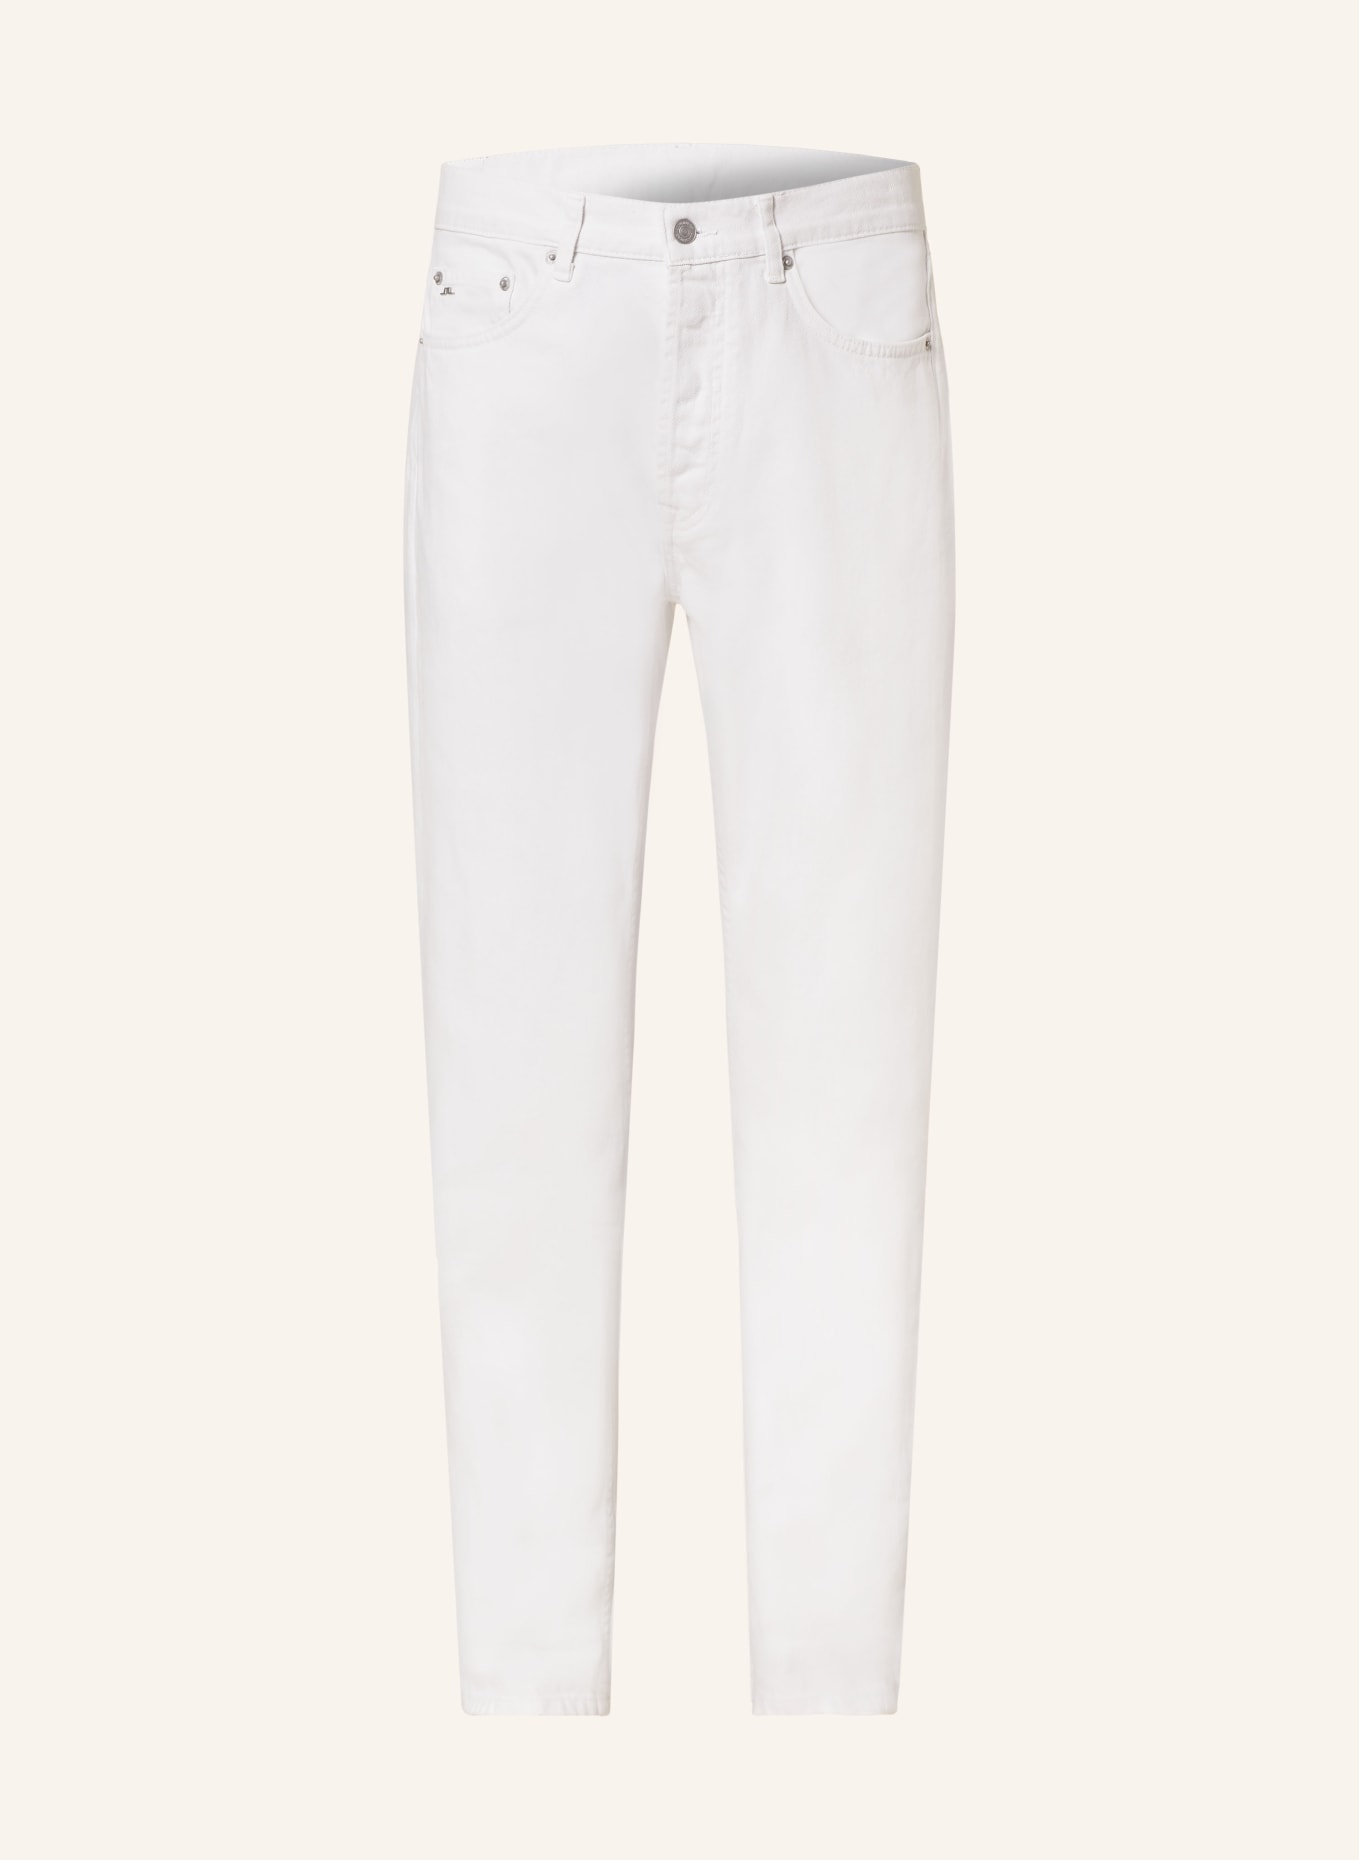 J.LINDEBERG Jeans Slim Fit, Farbe: A003 Cloud White (Bild 1)